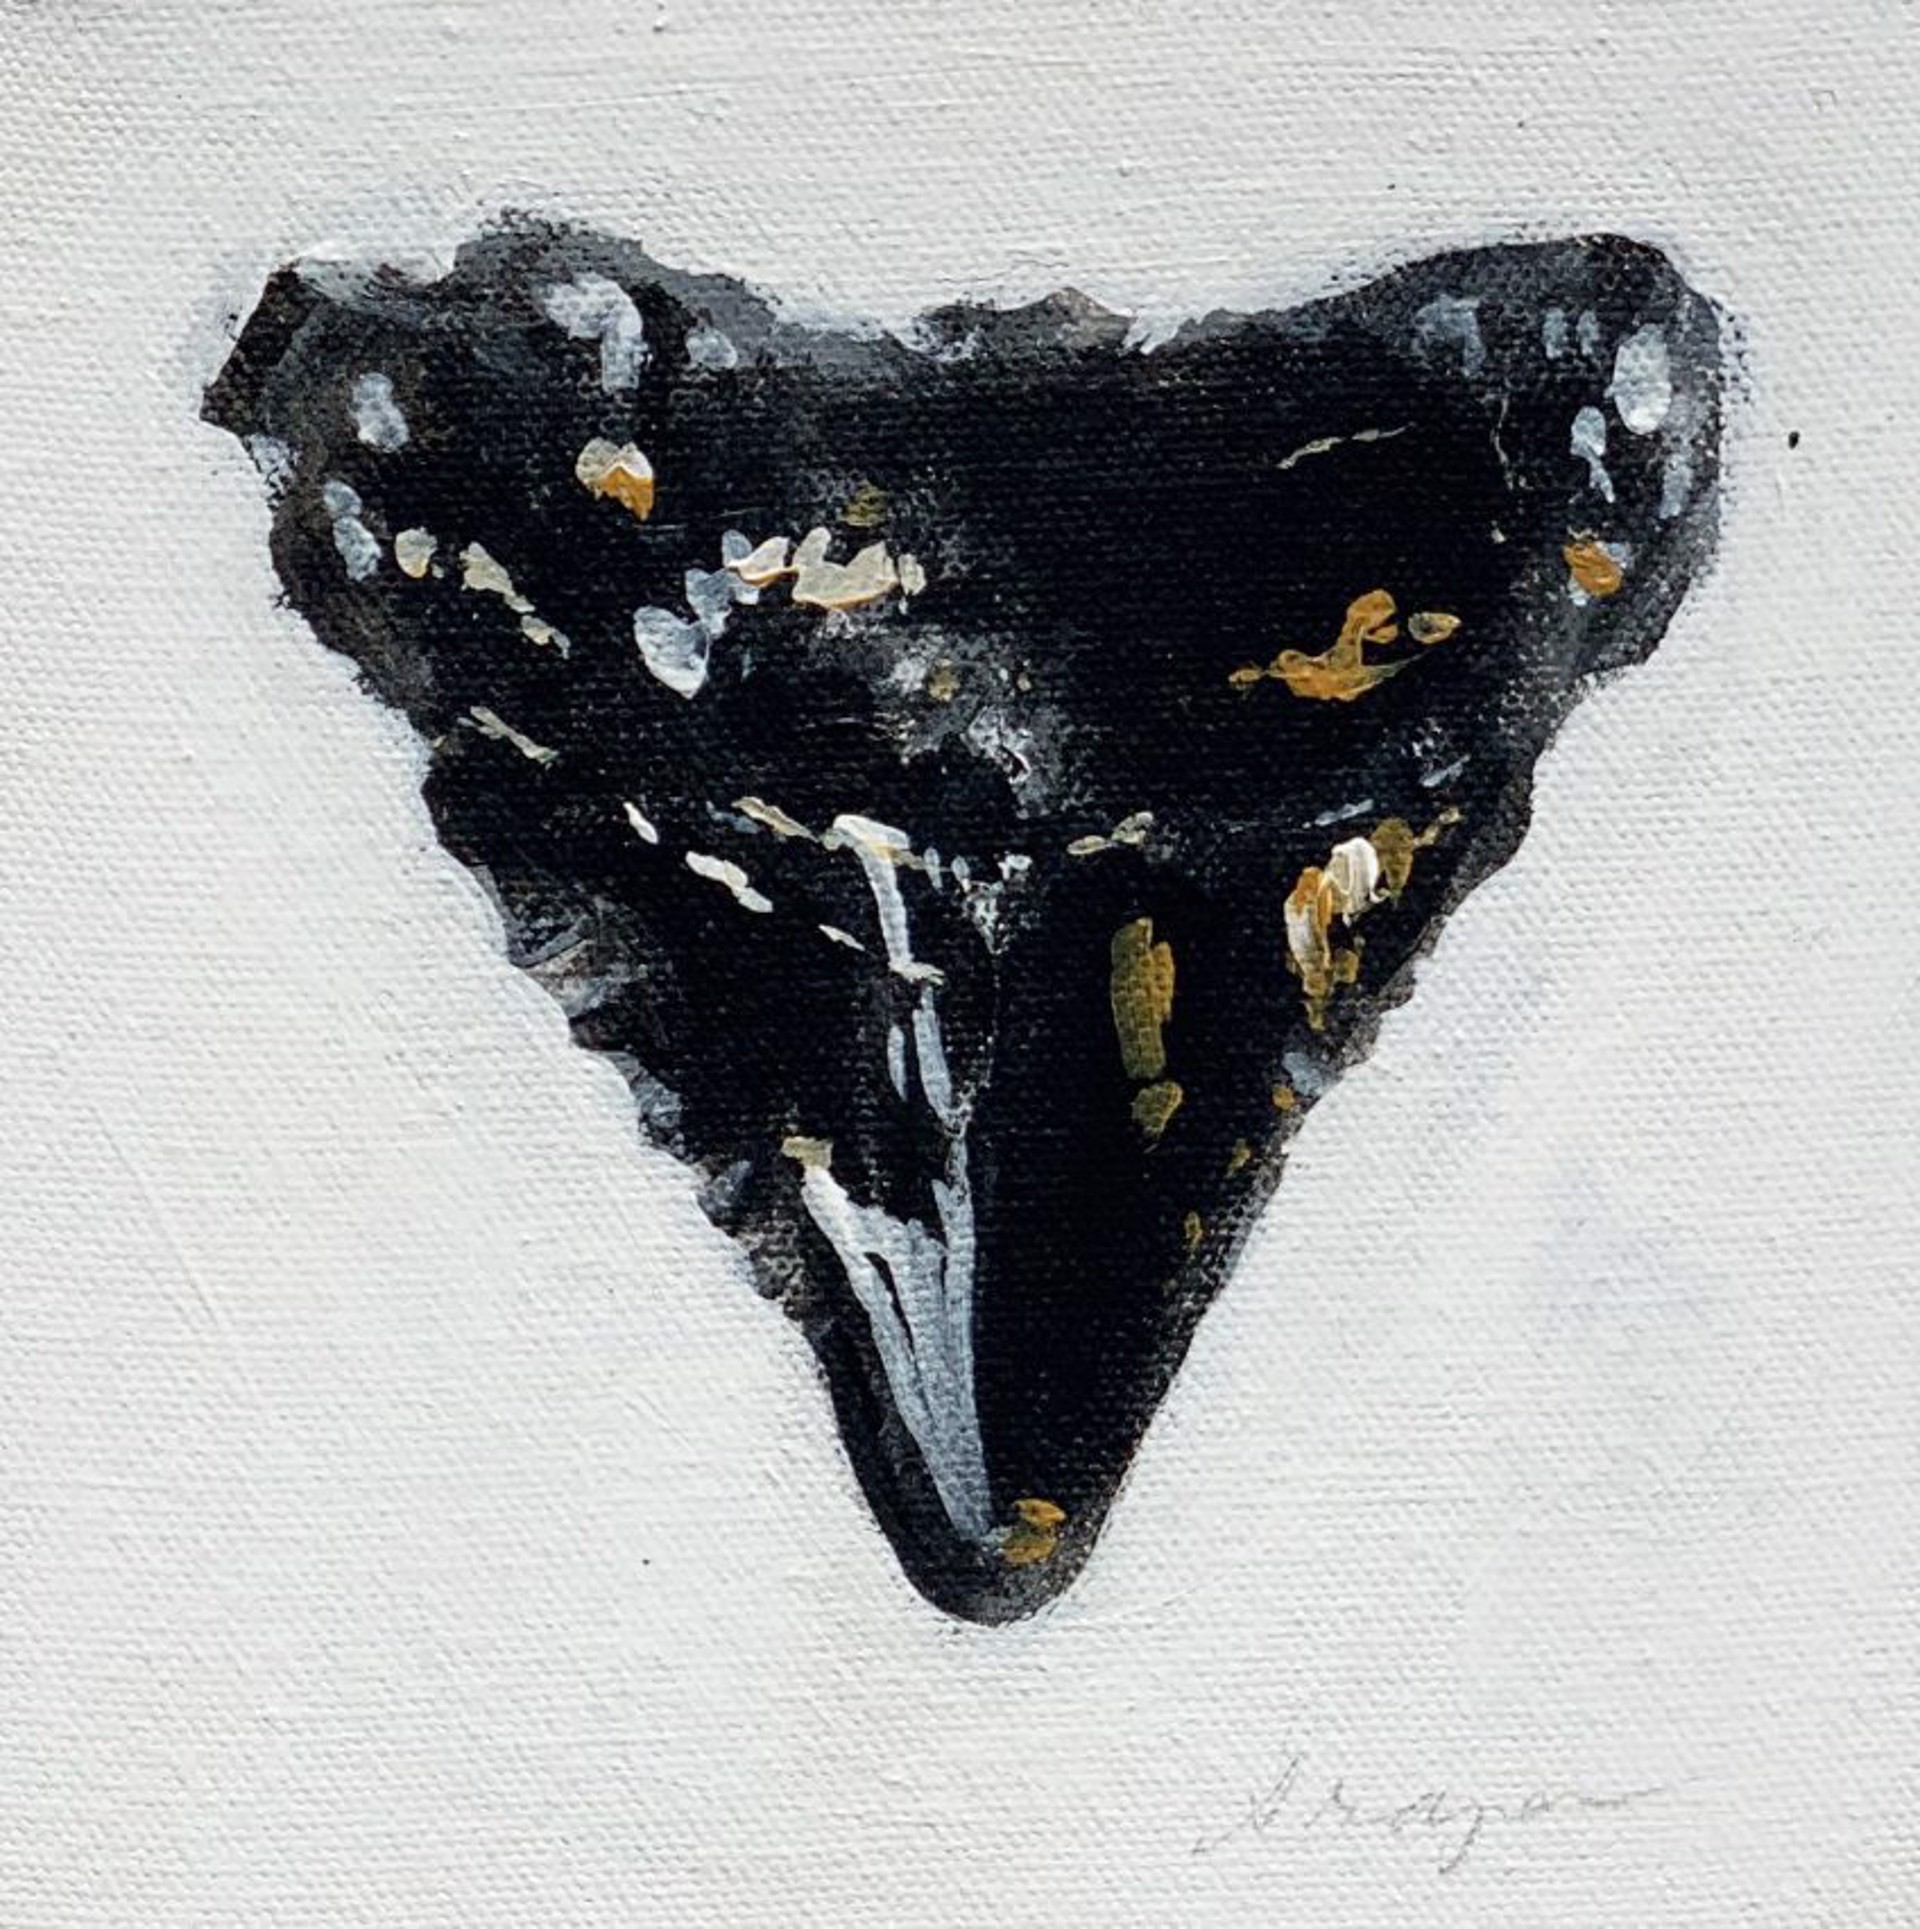 Sharksteeth-18x18 by Jim Draper